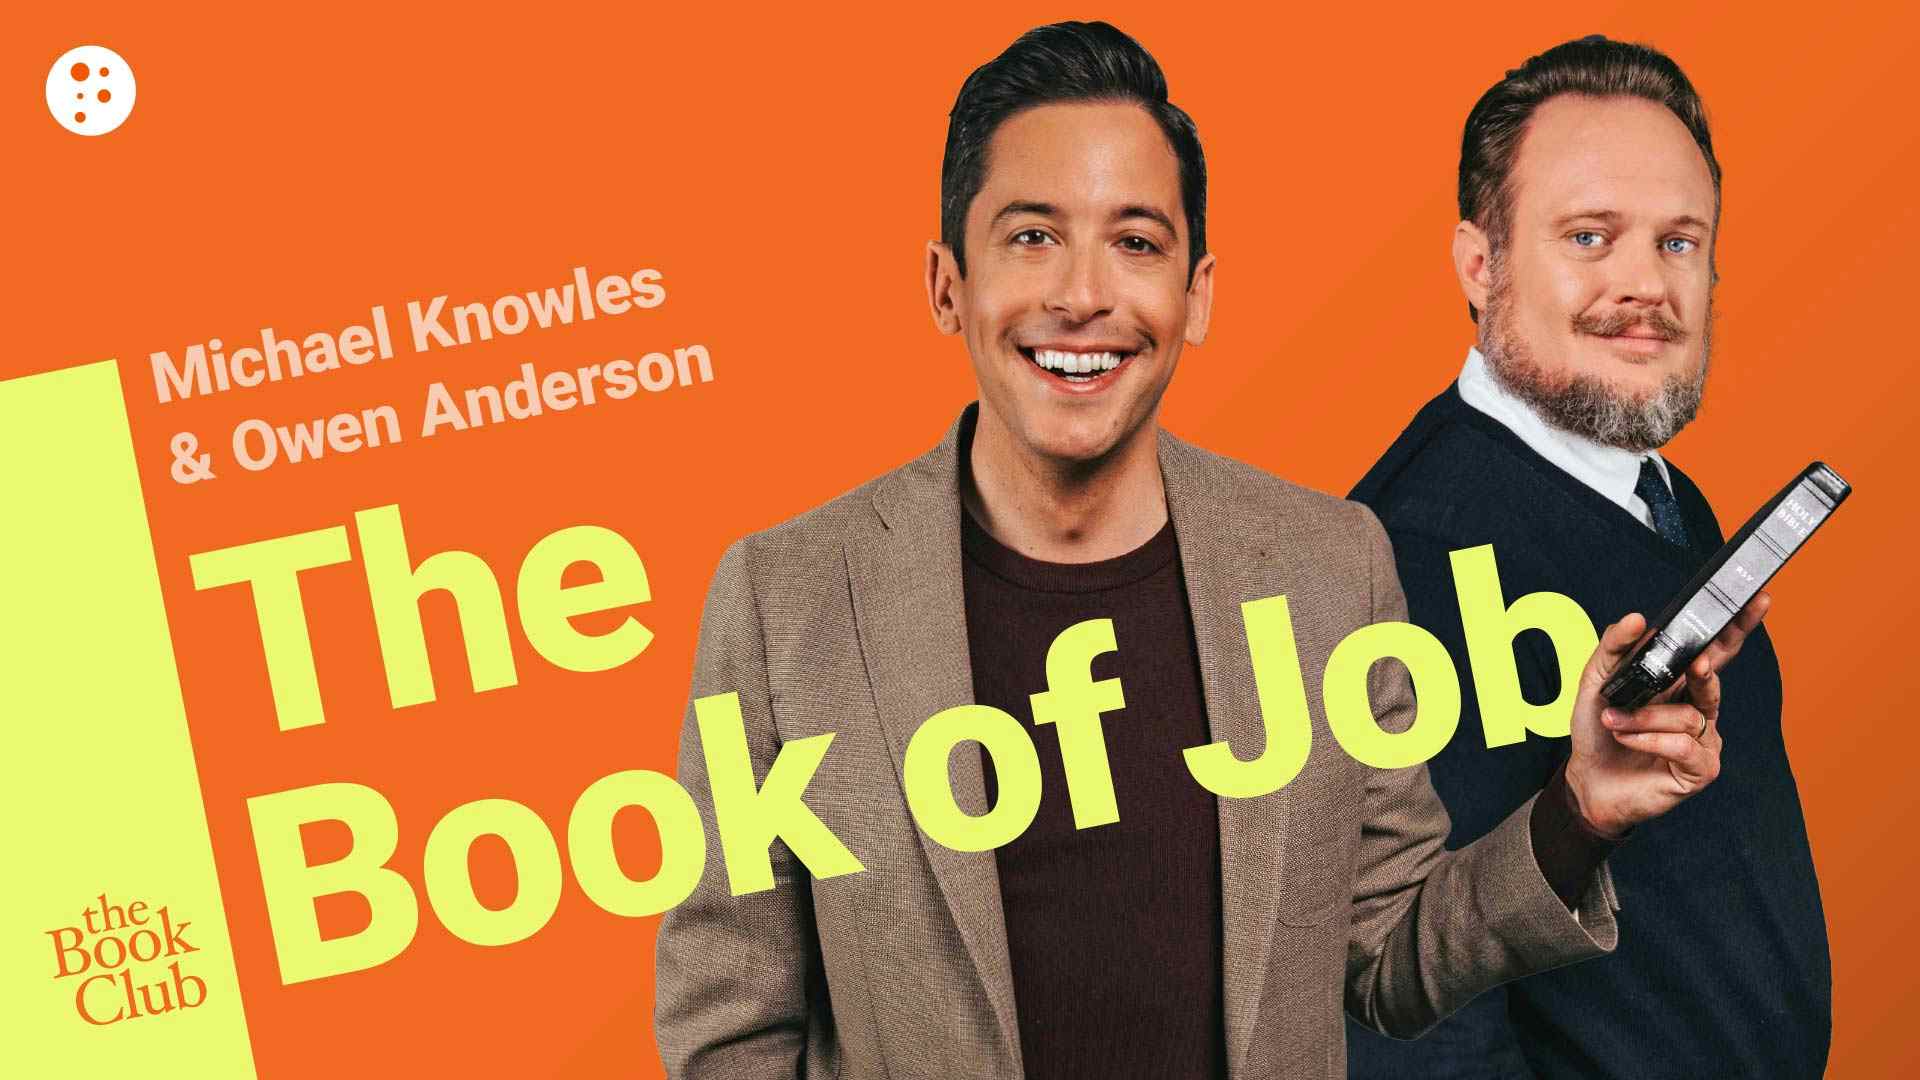 Owen Anderson: The Book of Job